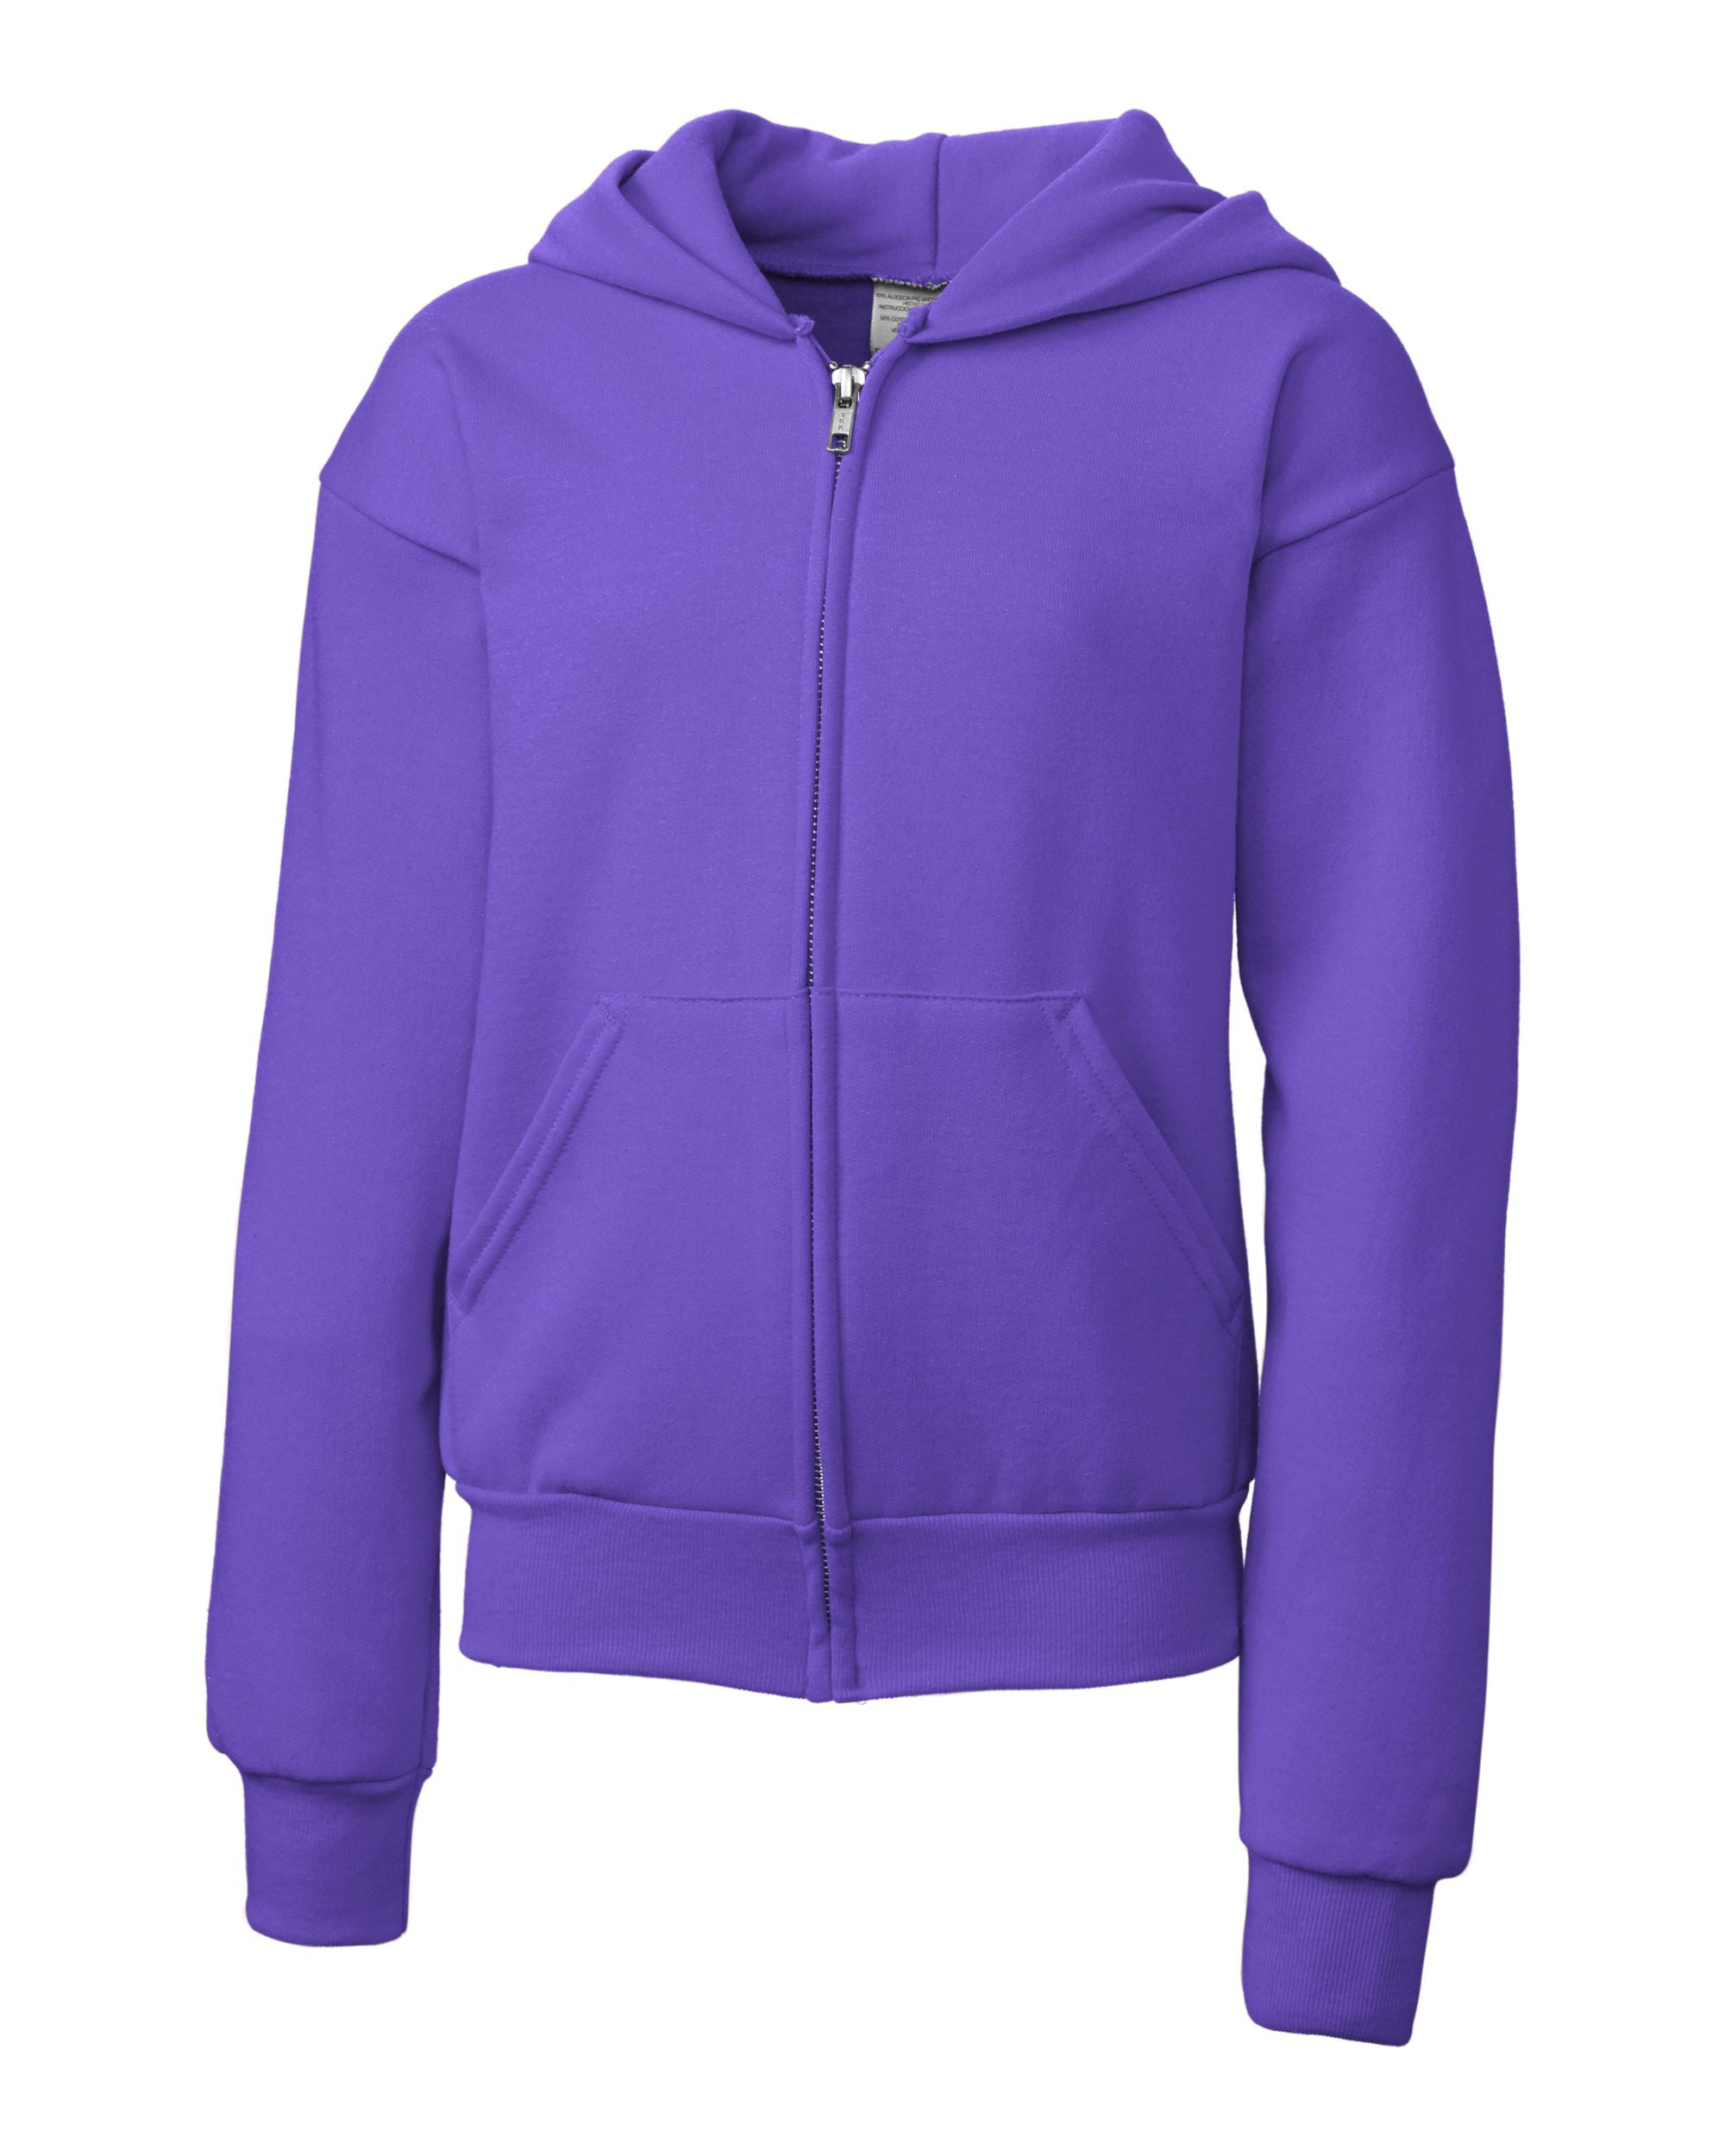 Adidas - Clique Youth Basics Youth Fleece Full Zip Hoodie, Purple - M ...